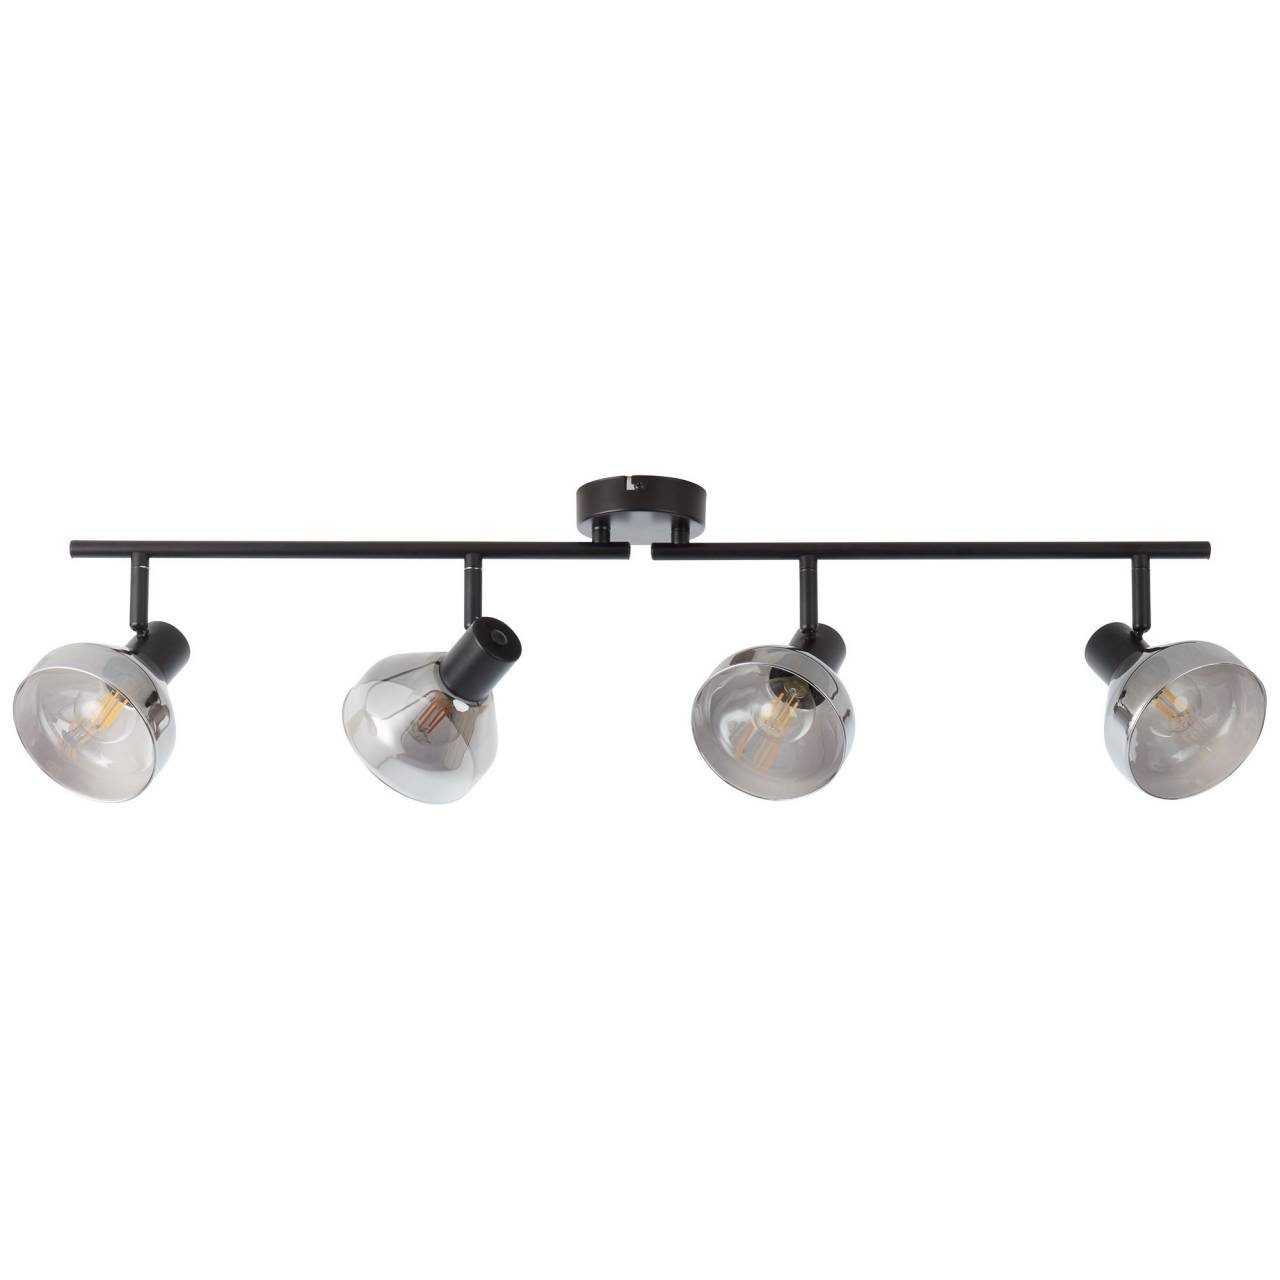 Brilliant Deckenleuchte Reflekt, Lampe Reflekt Spotrohr D45, 18W 4x E14, 4flg schwarzmatt/rauchglas